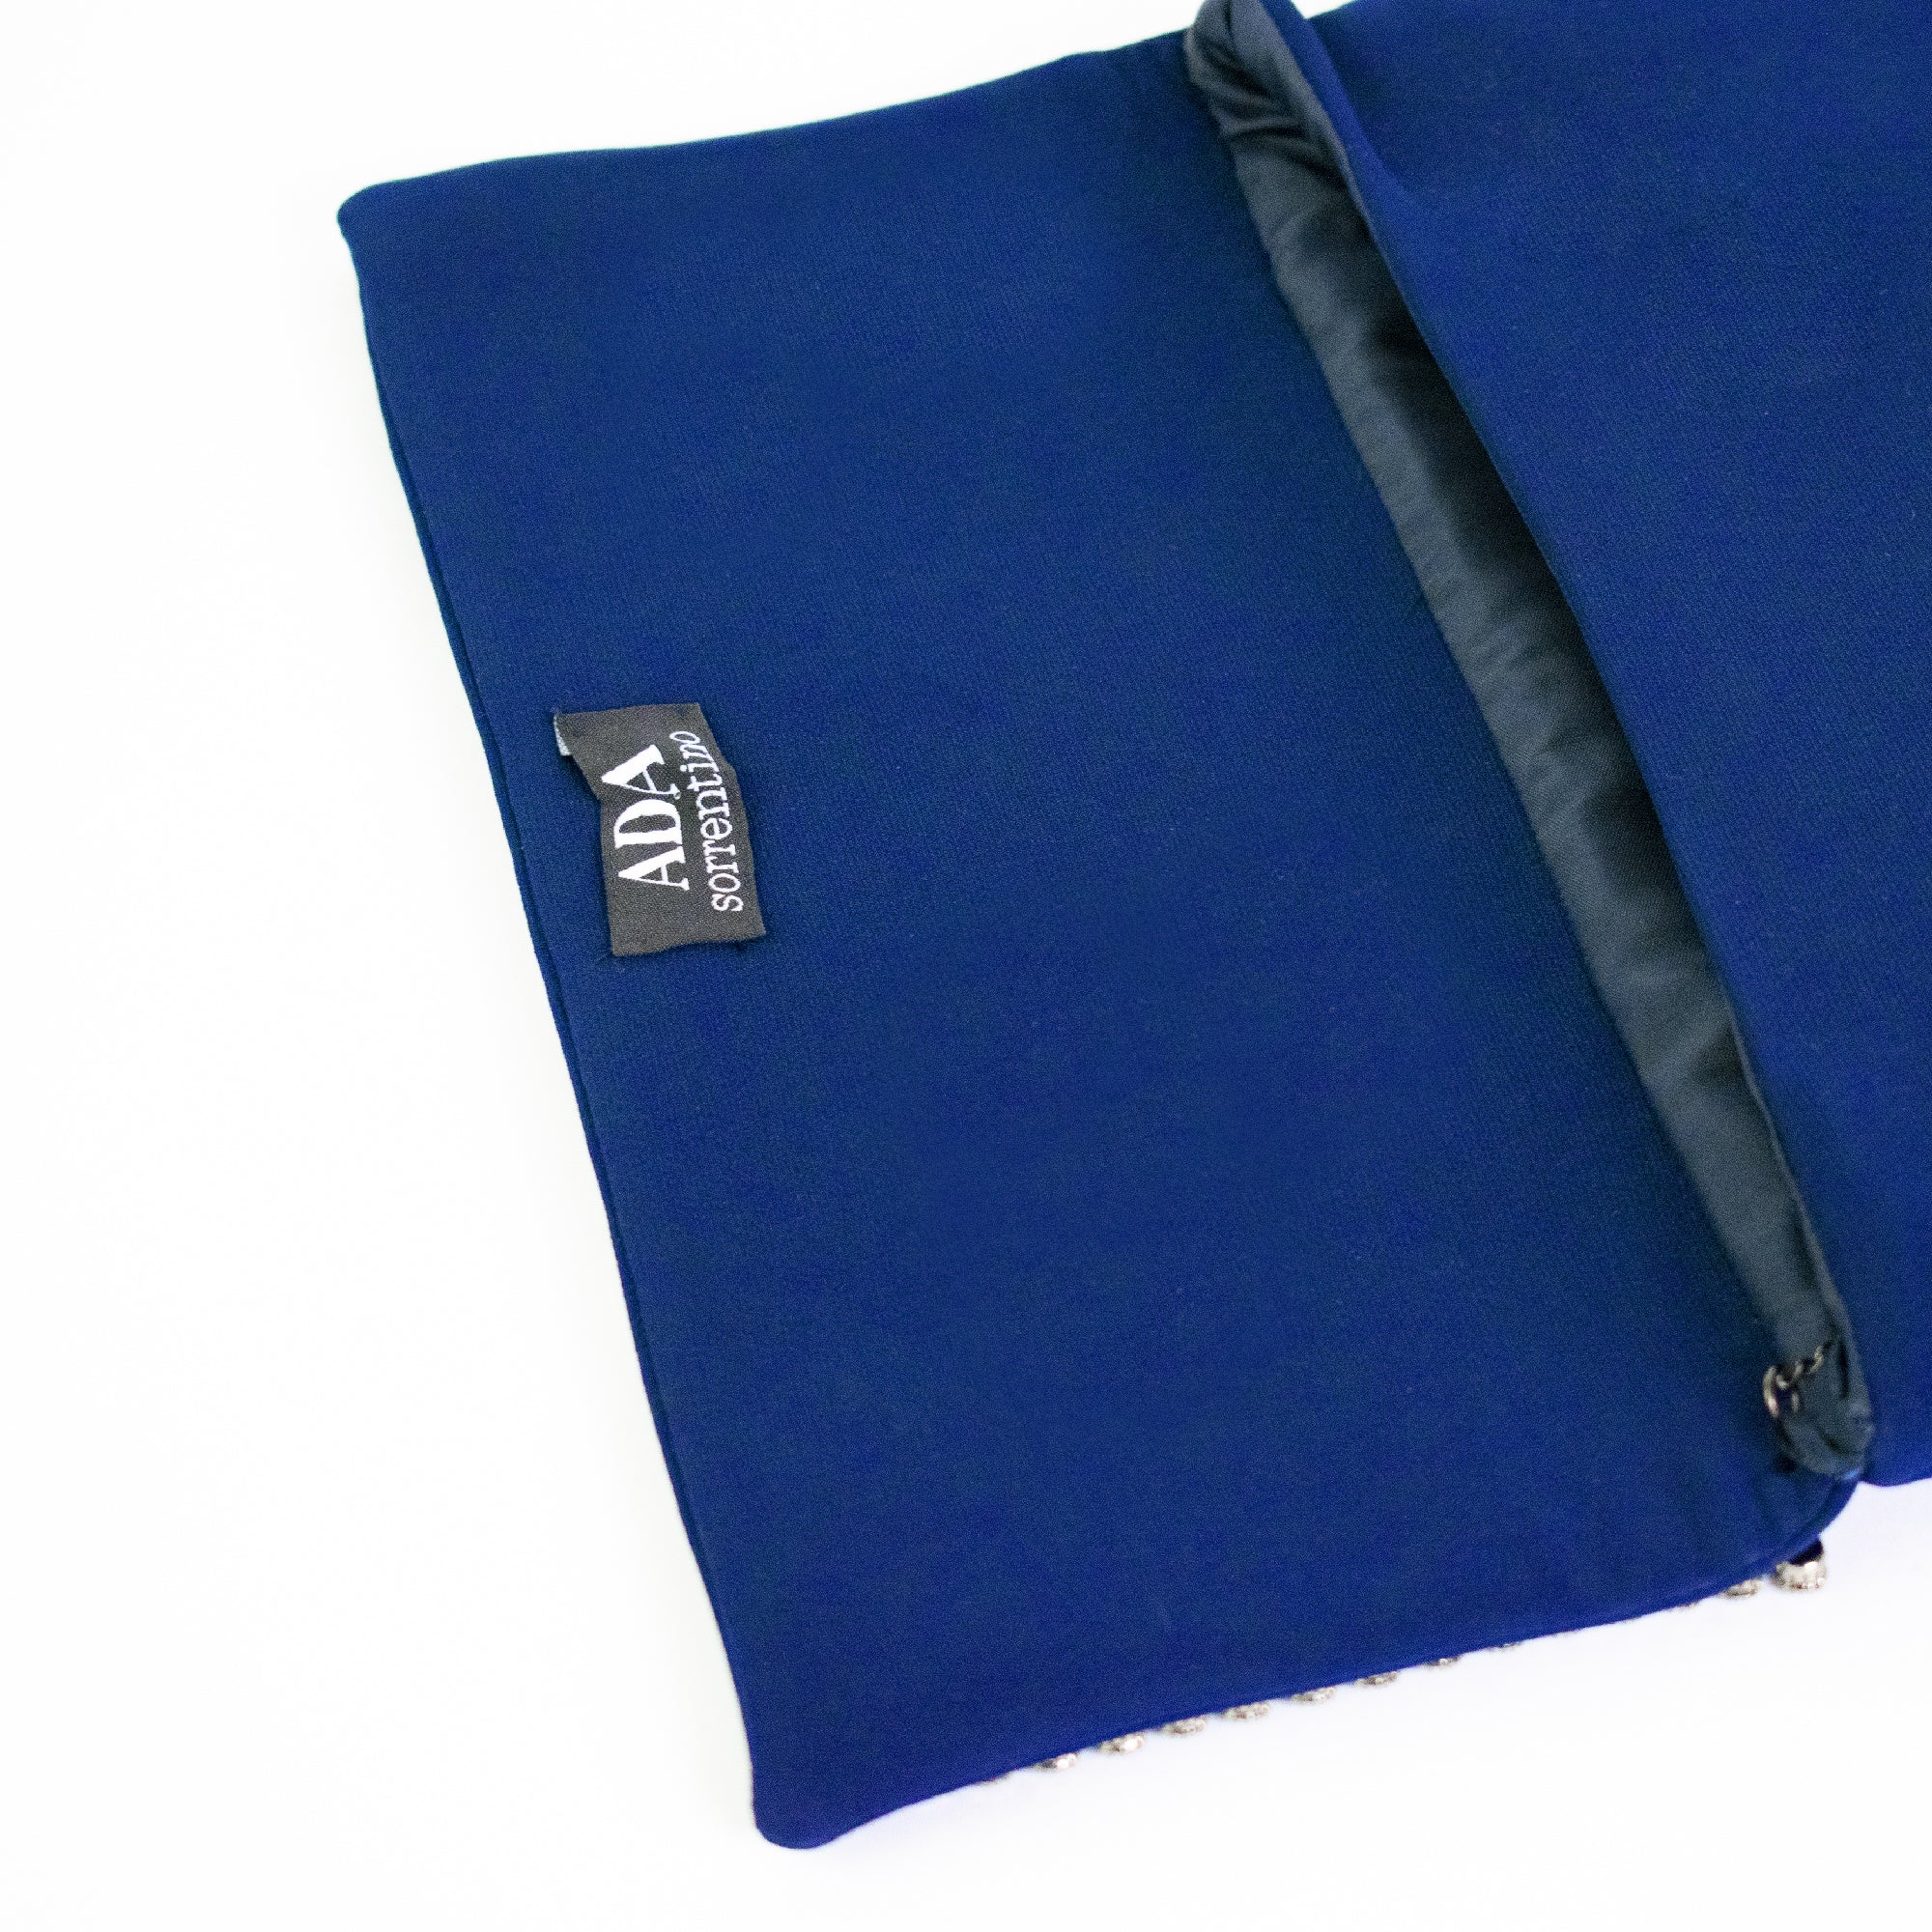 Blue clutch bag with Svarovski